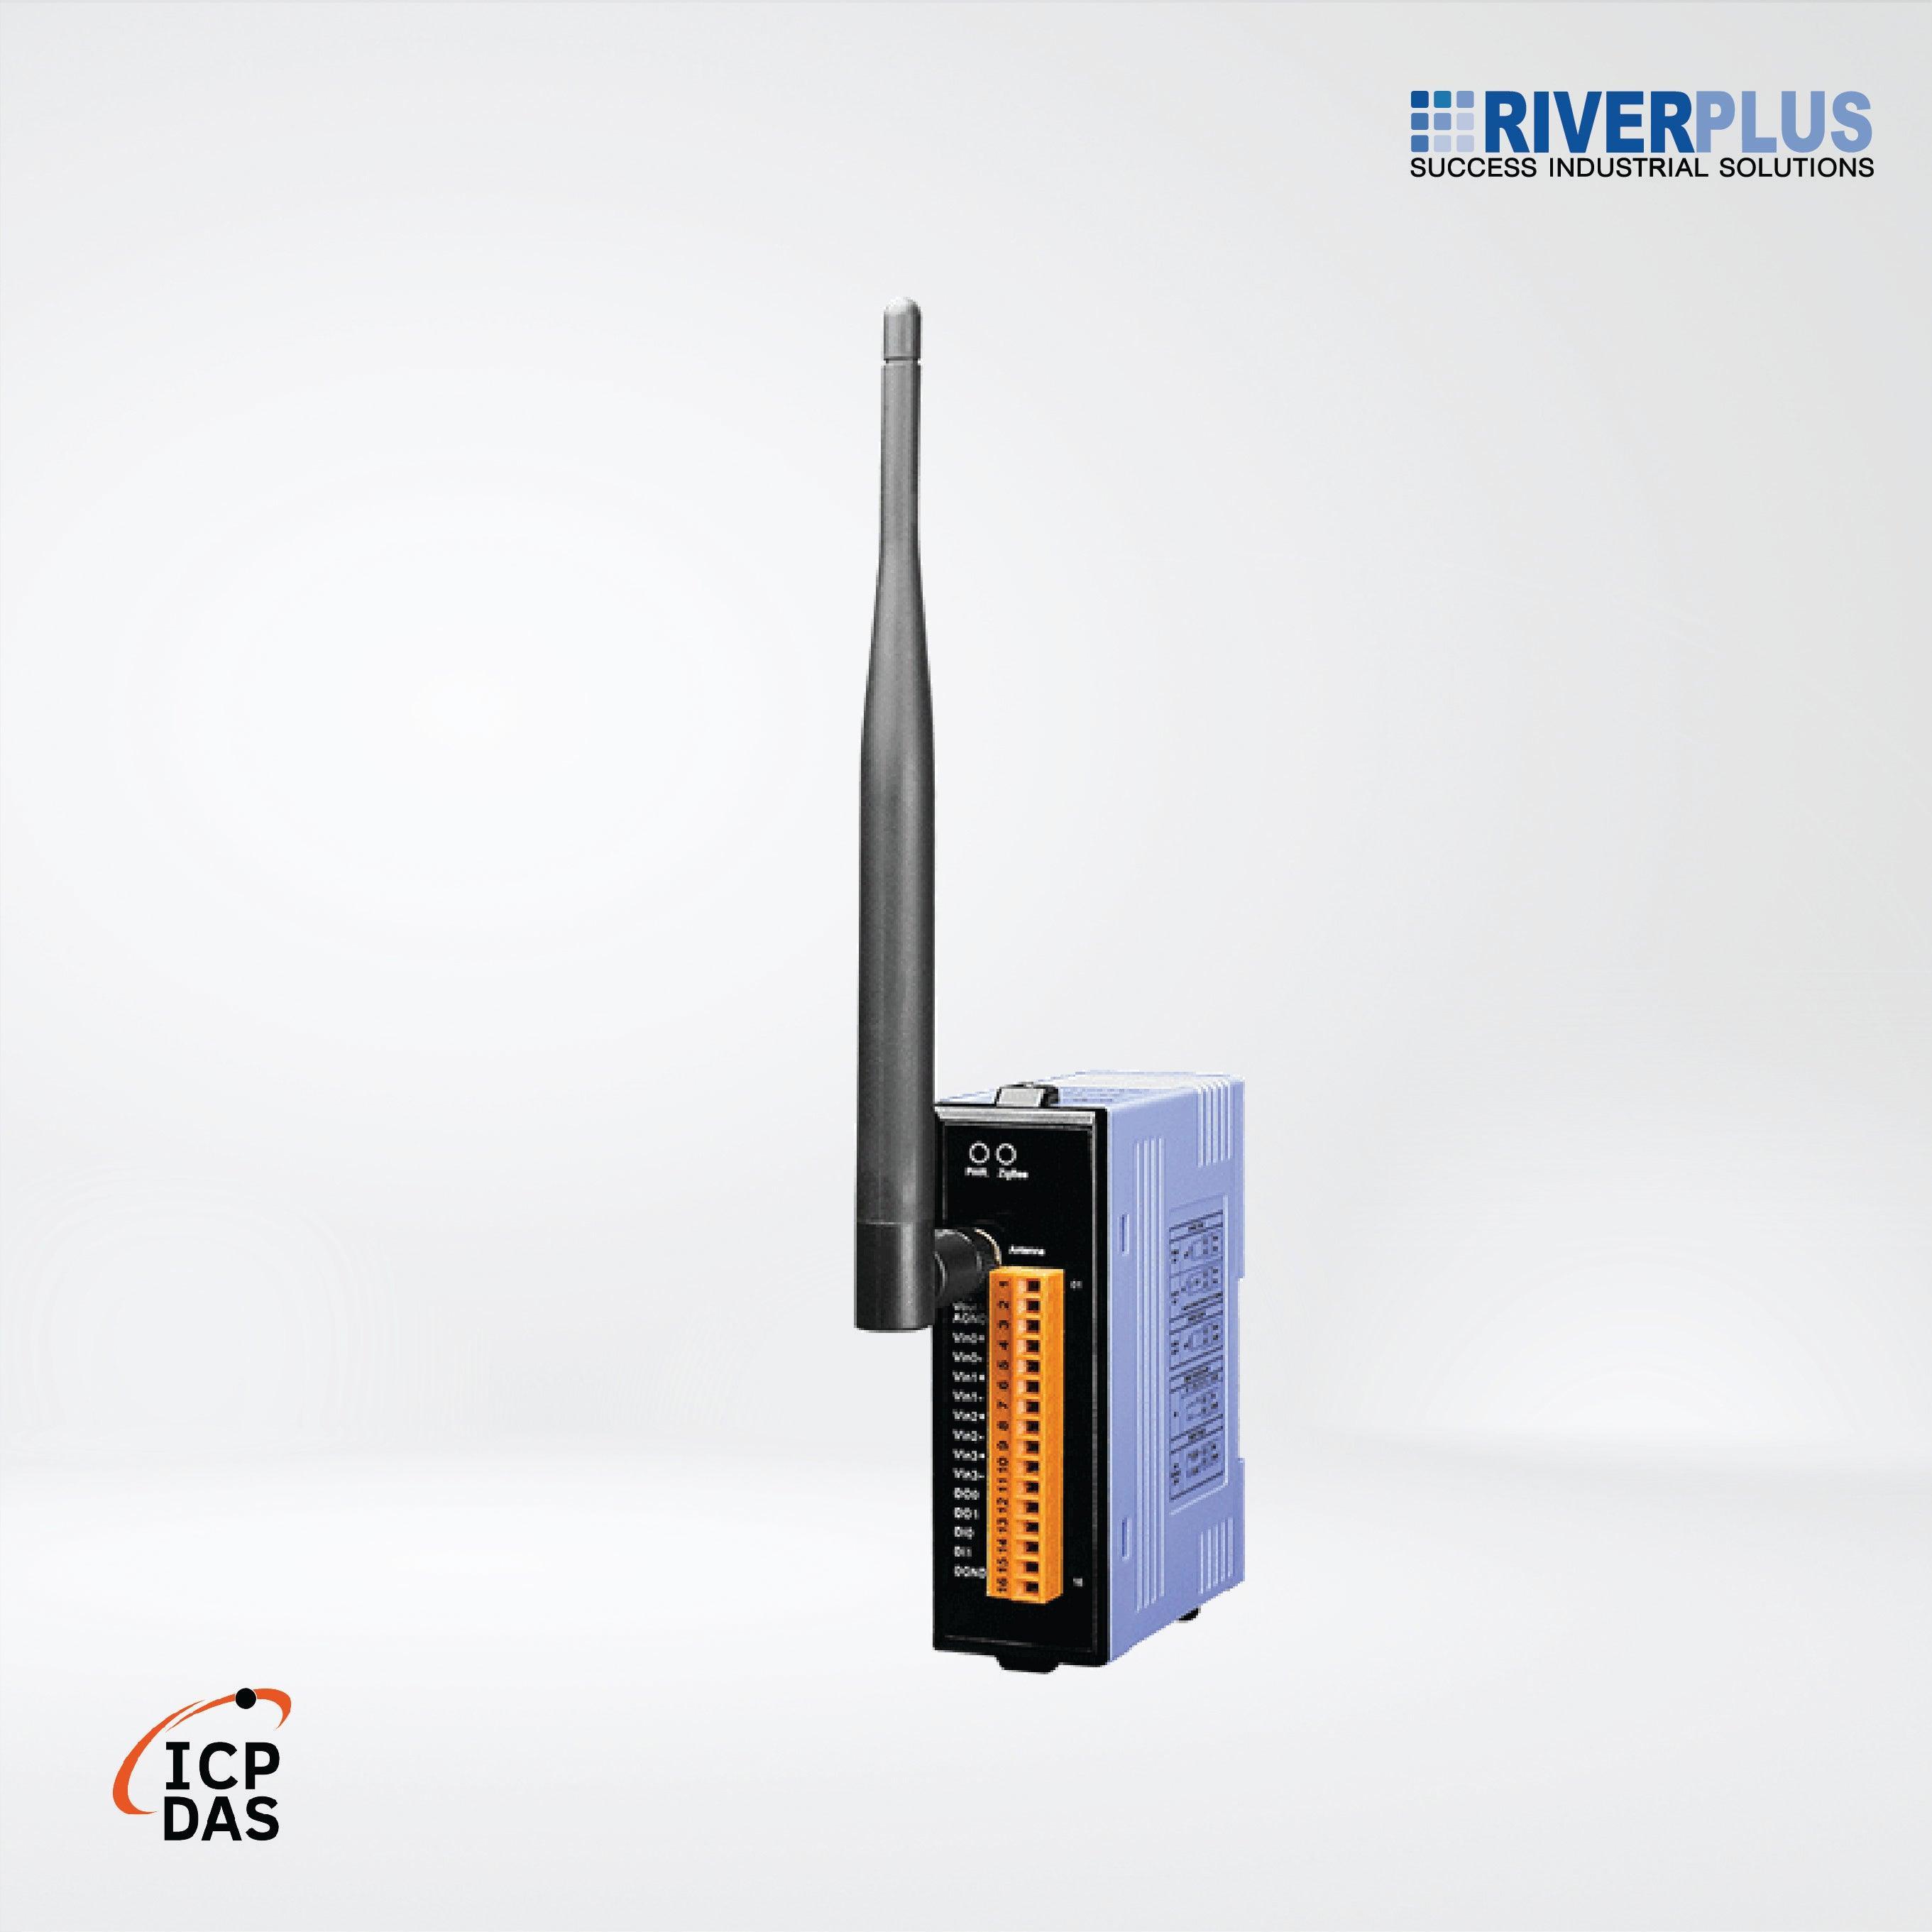 ZT-2026 ZigBee Wireless 4-ch Voltage Input - Riverplus